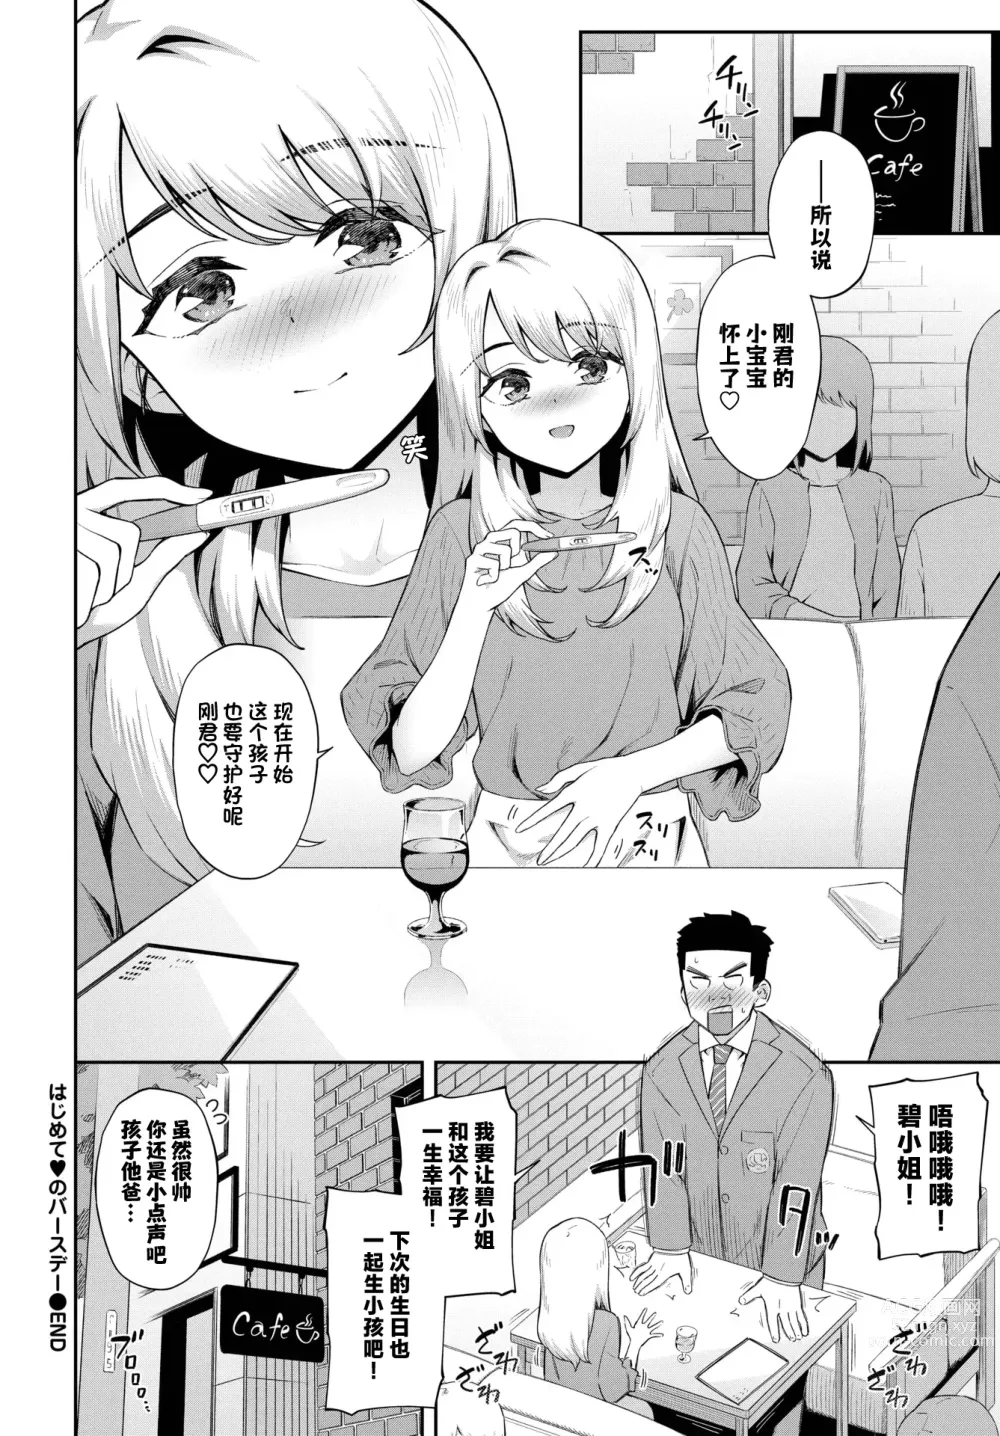 Page 22 of manga Hajimete ♥ no Birthday - First Birthday.